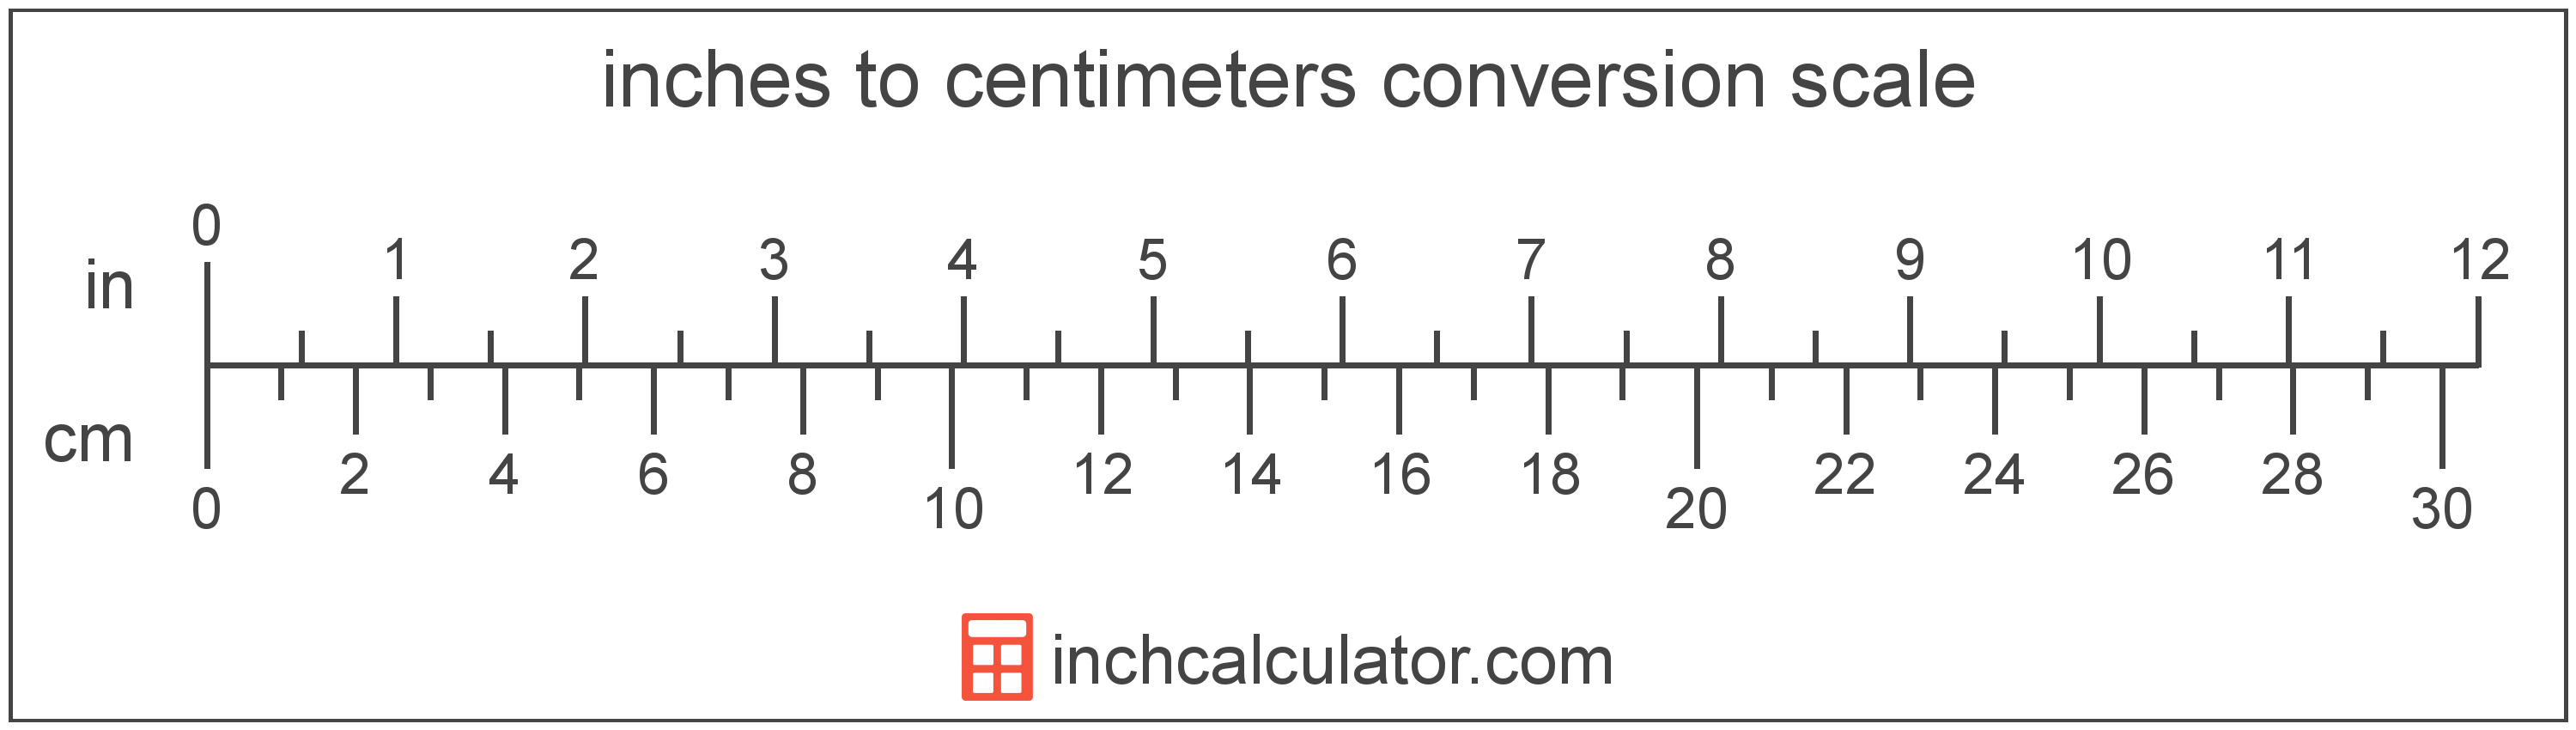 Inch To Centimeter Conversion Scale 